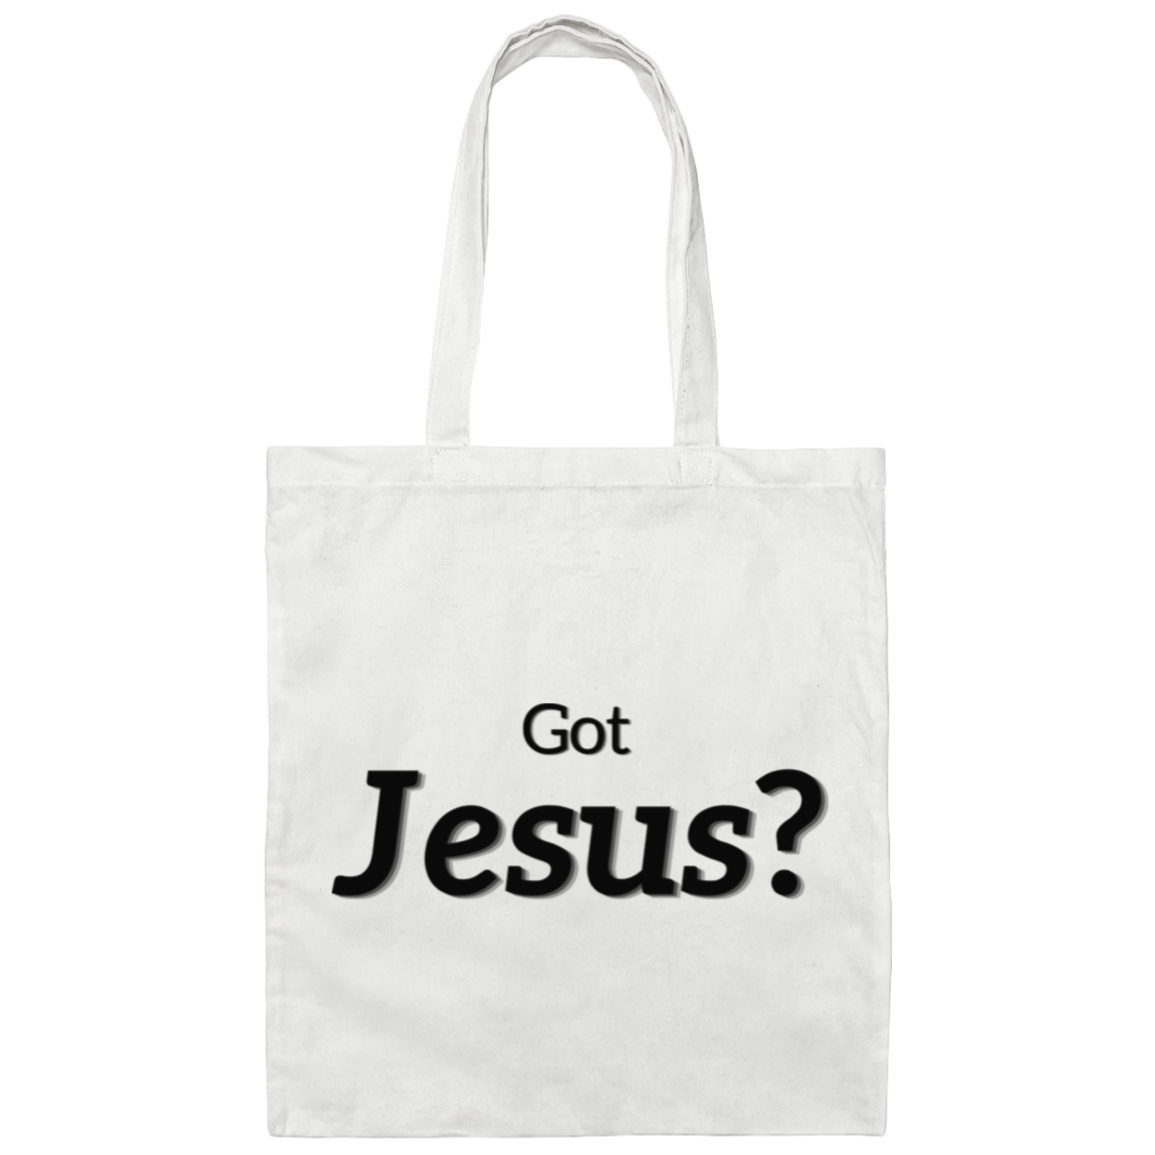 Got Jesus? - Tote Bag